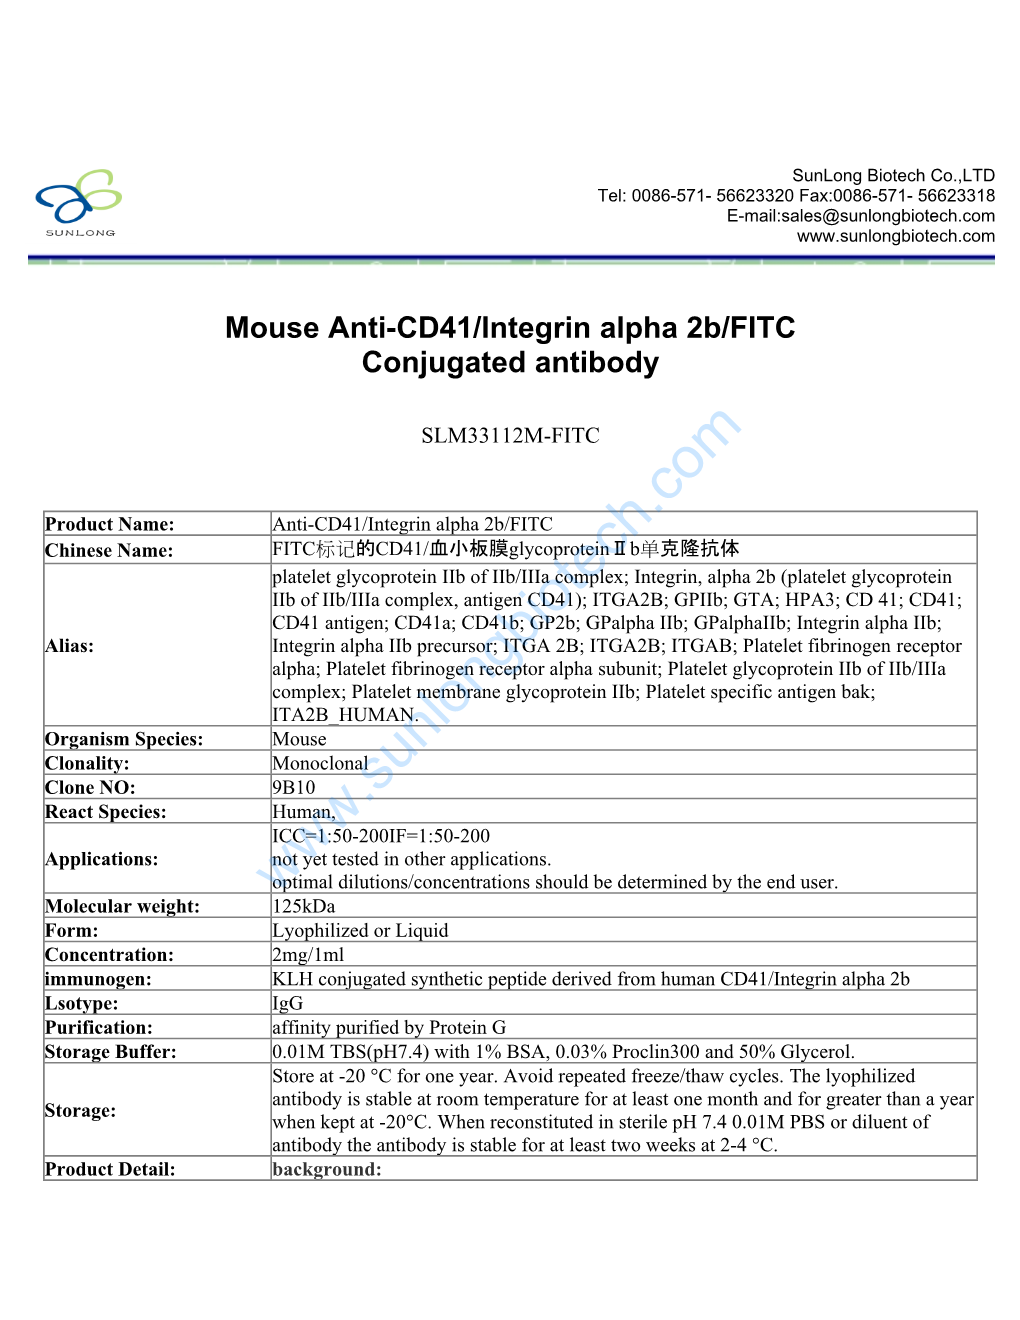 Mouse Anti-CD41/Integrin Alpha 2B/FITC Conjugated Antibody